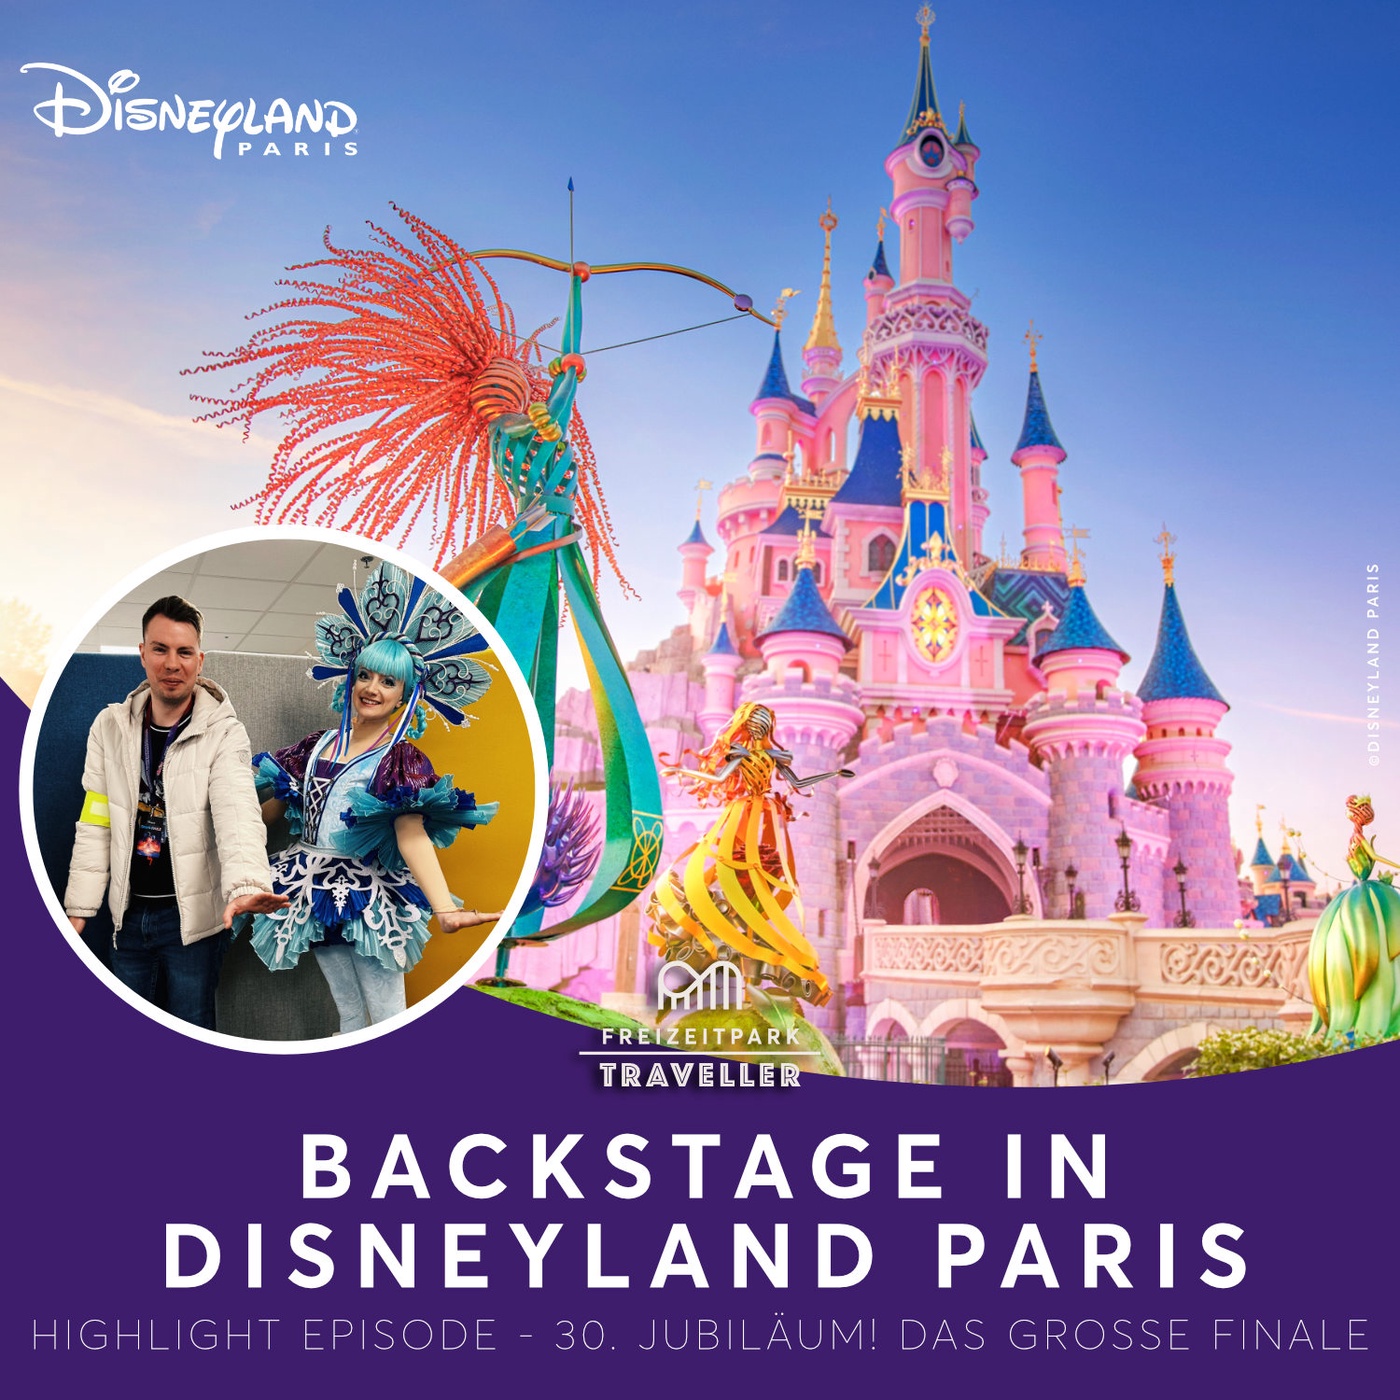 Backstage in Disneyland Paris - Highlight Episode!